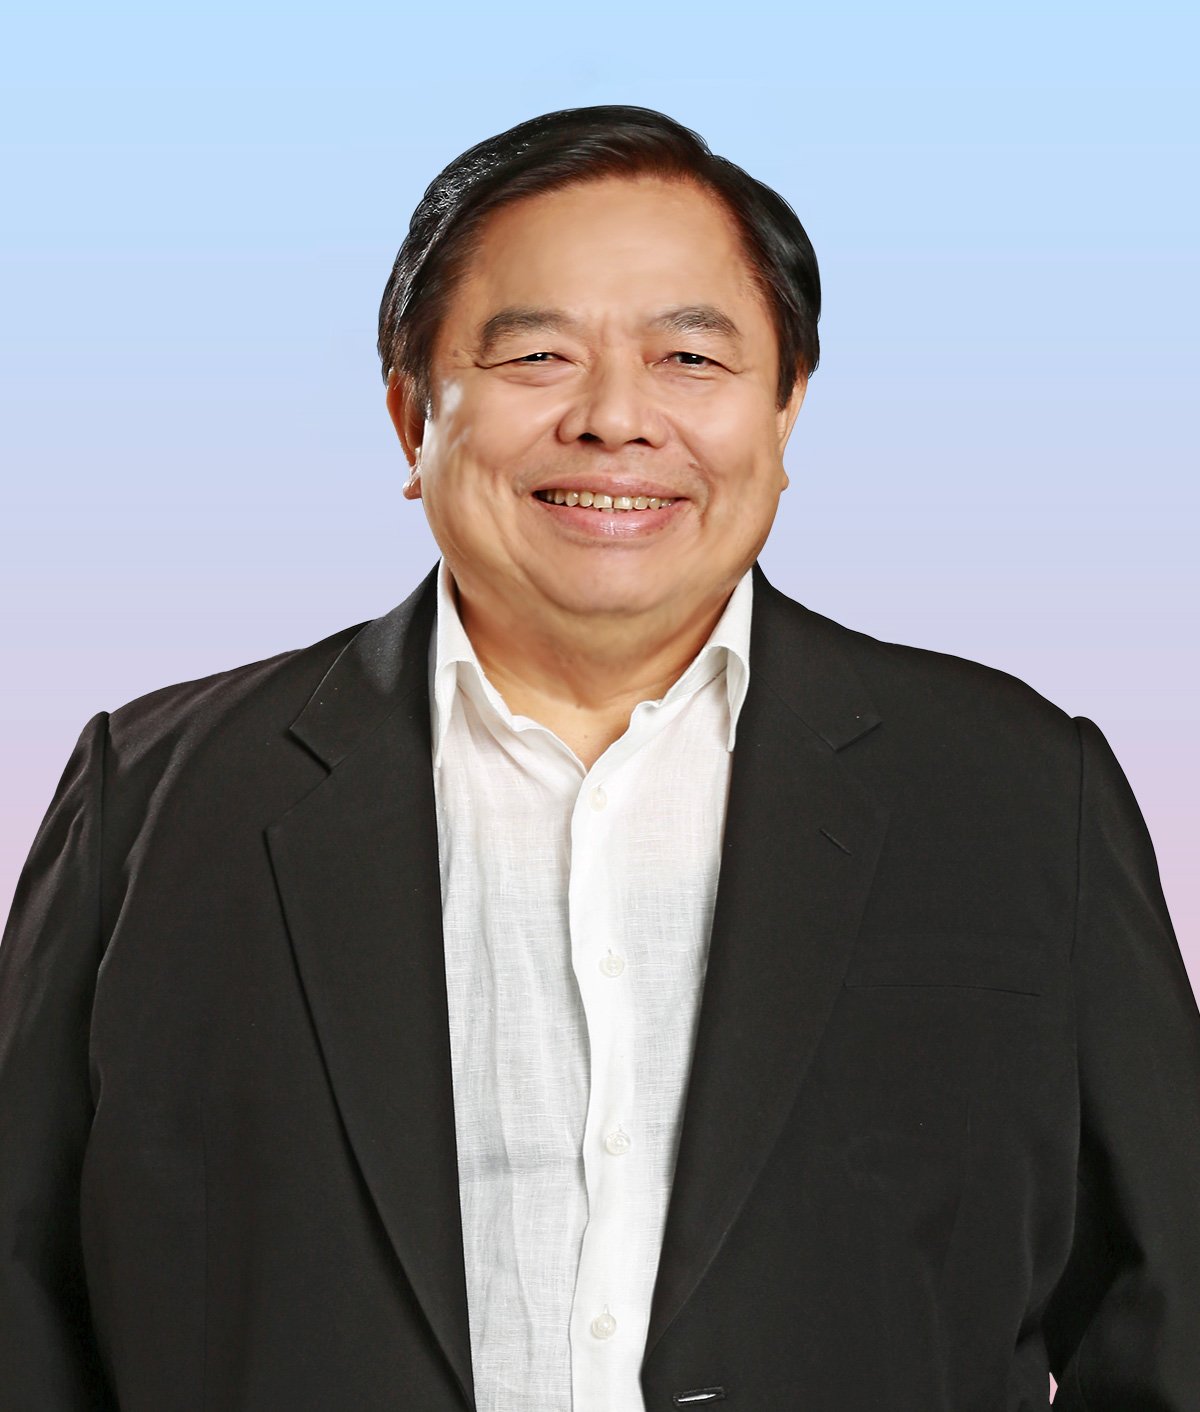 Mr. Subandit Suwannop